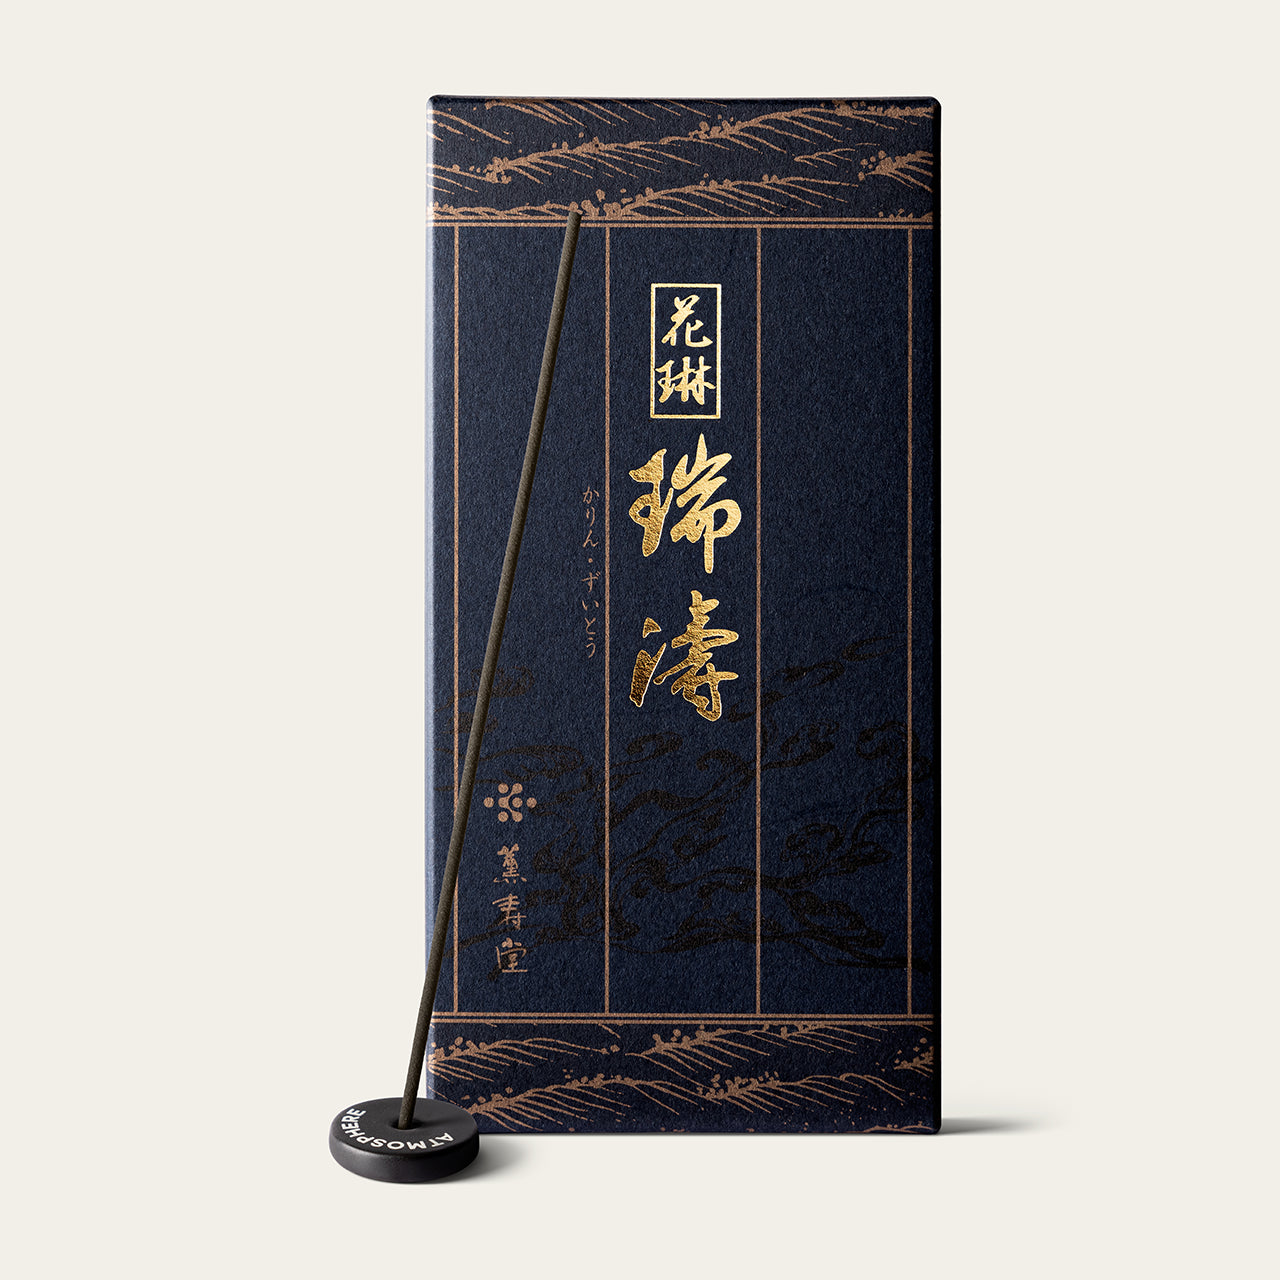 Kunjudo Golden Wave Karin Zuito Japanese incense sticks (220 sticks) with Atmosphere ceramic incense holder